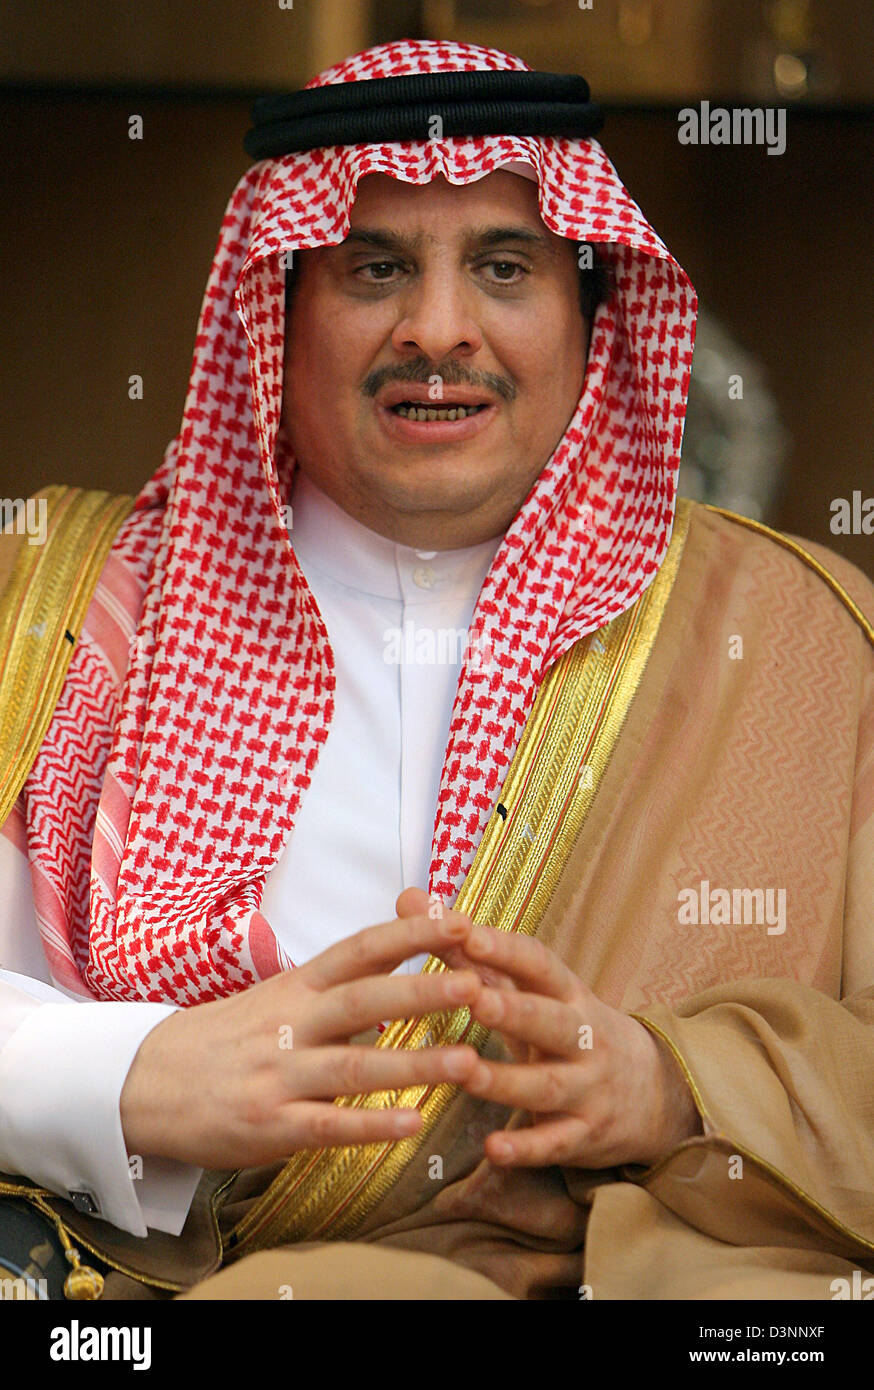 Prince fahd al saud hi-res stock photography and images - Alamy